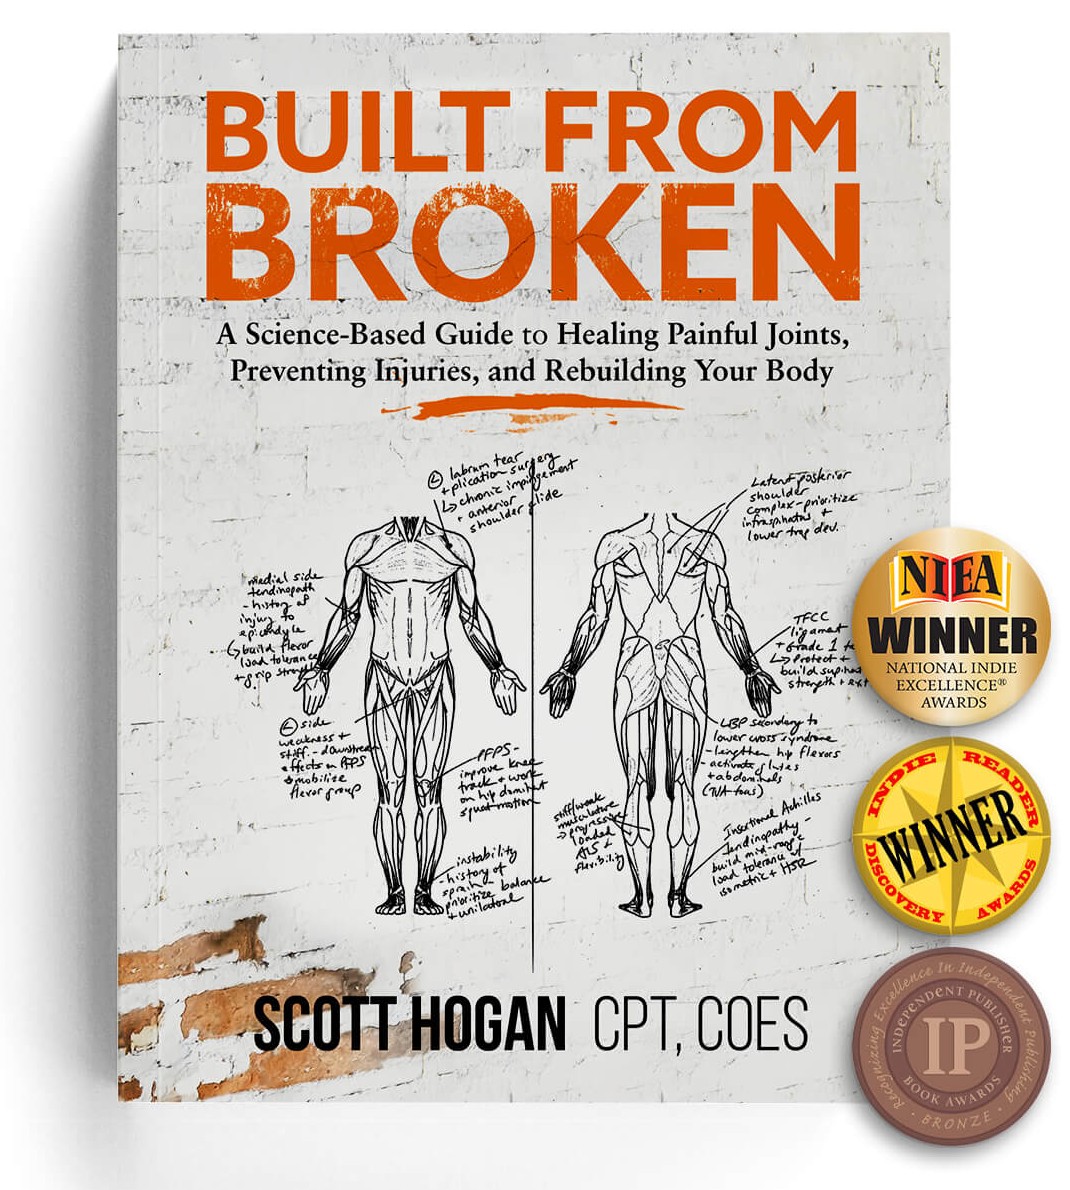 "Built From Broken" is SaltWrap founder Scott Hogan's bestselling, science-based guide to rebuilding your body